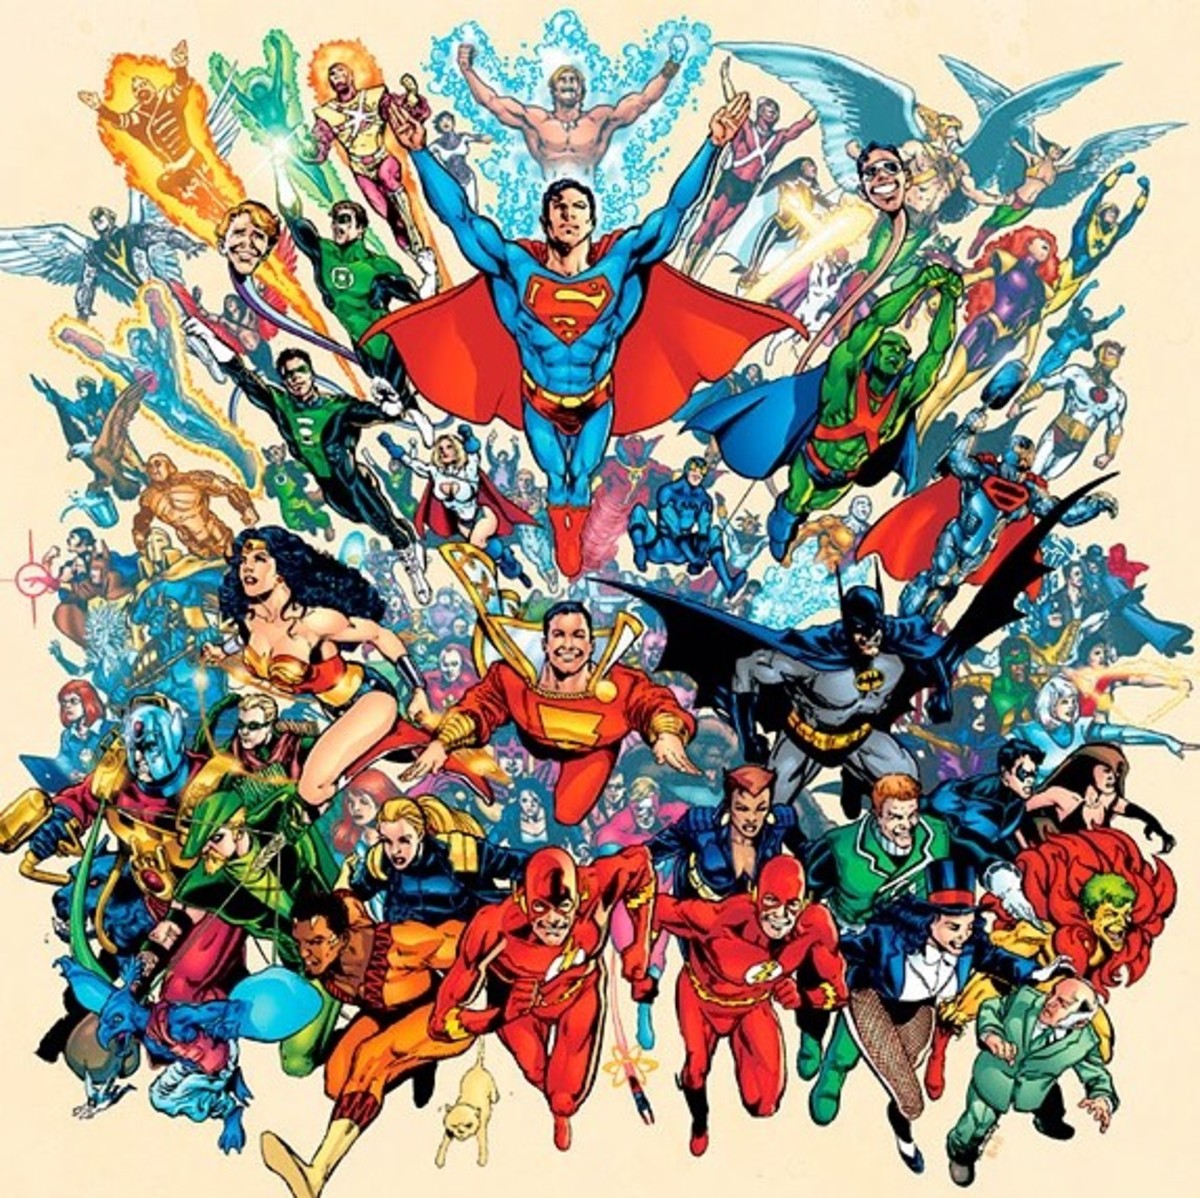 Is super heroes. Герои Марвел (Вселенная Марвел). DC Universe комиксы. Вселенная ДИСИ герои. Вселенная Марвел и ДС.